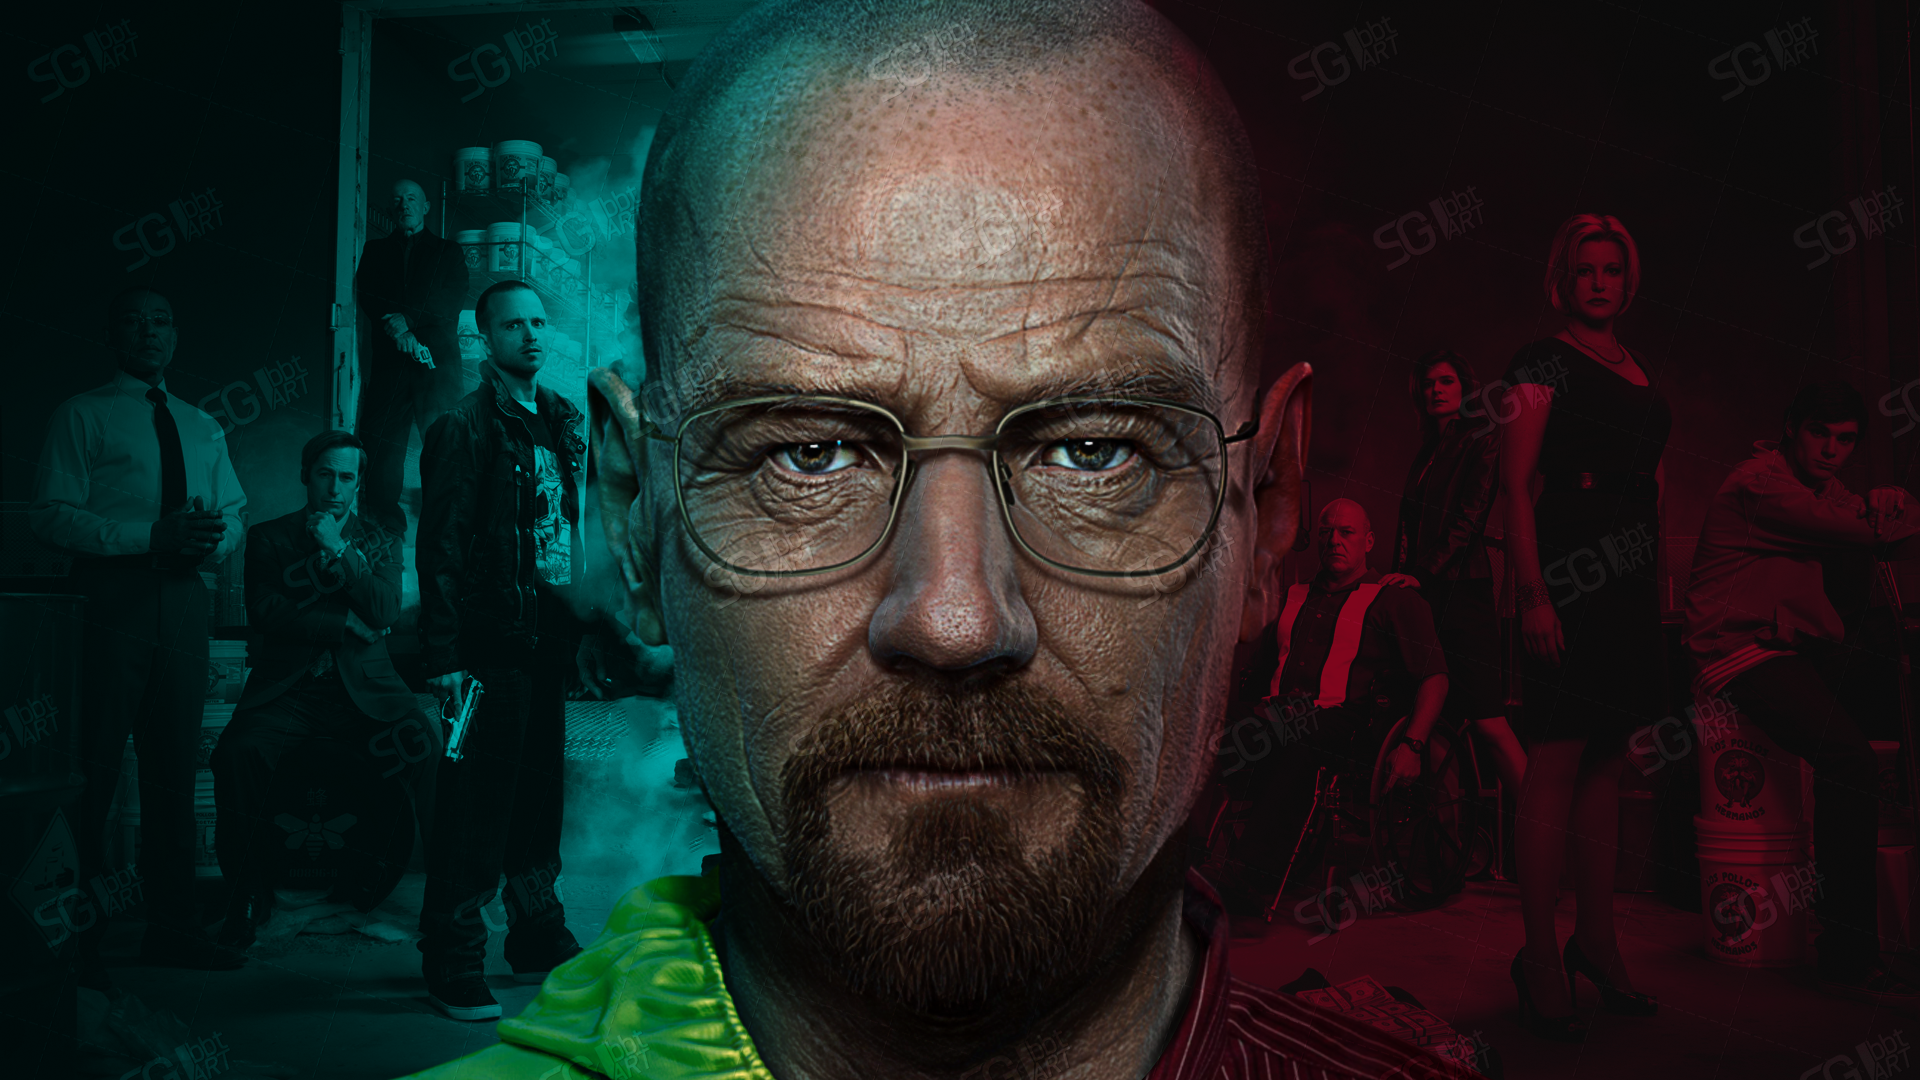 heisenberg wallpaper,face,head,human,forehead,glasses